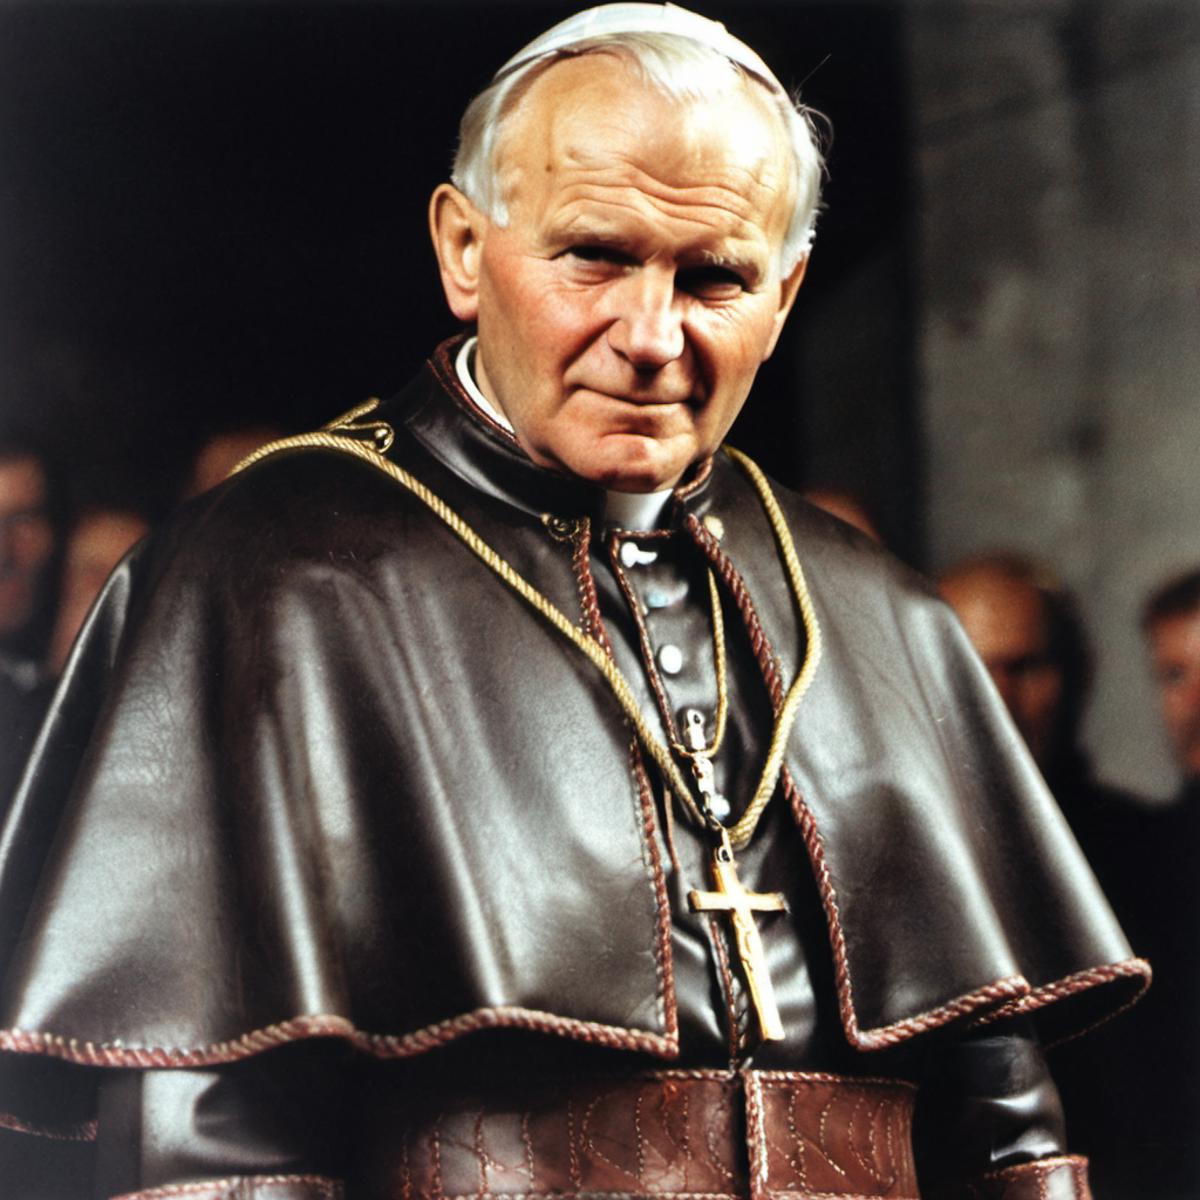 John Paul II / Jan Pawel 2 image by Azefir